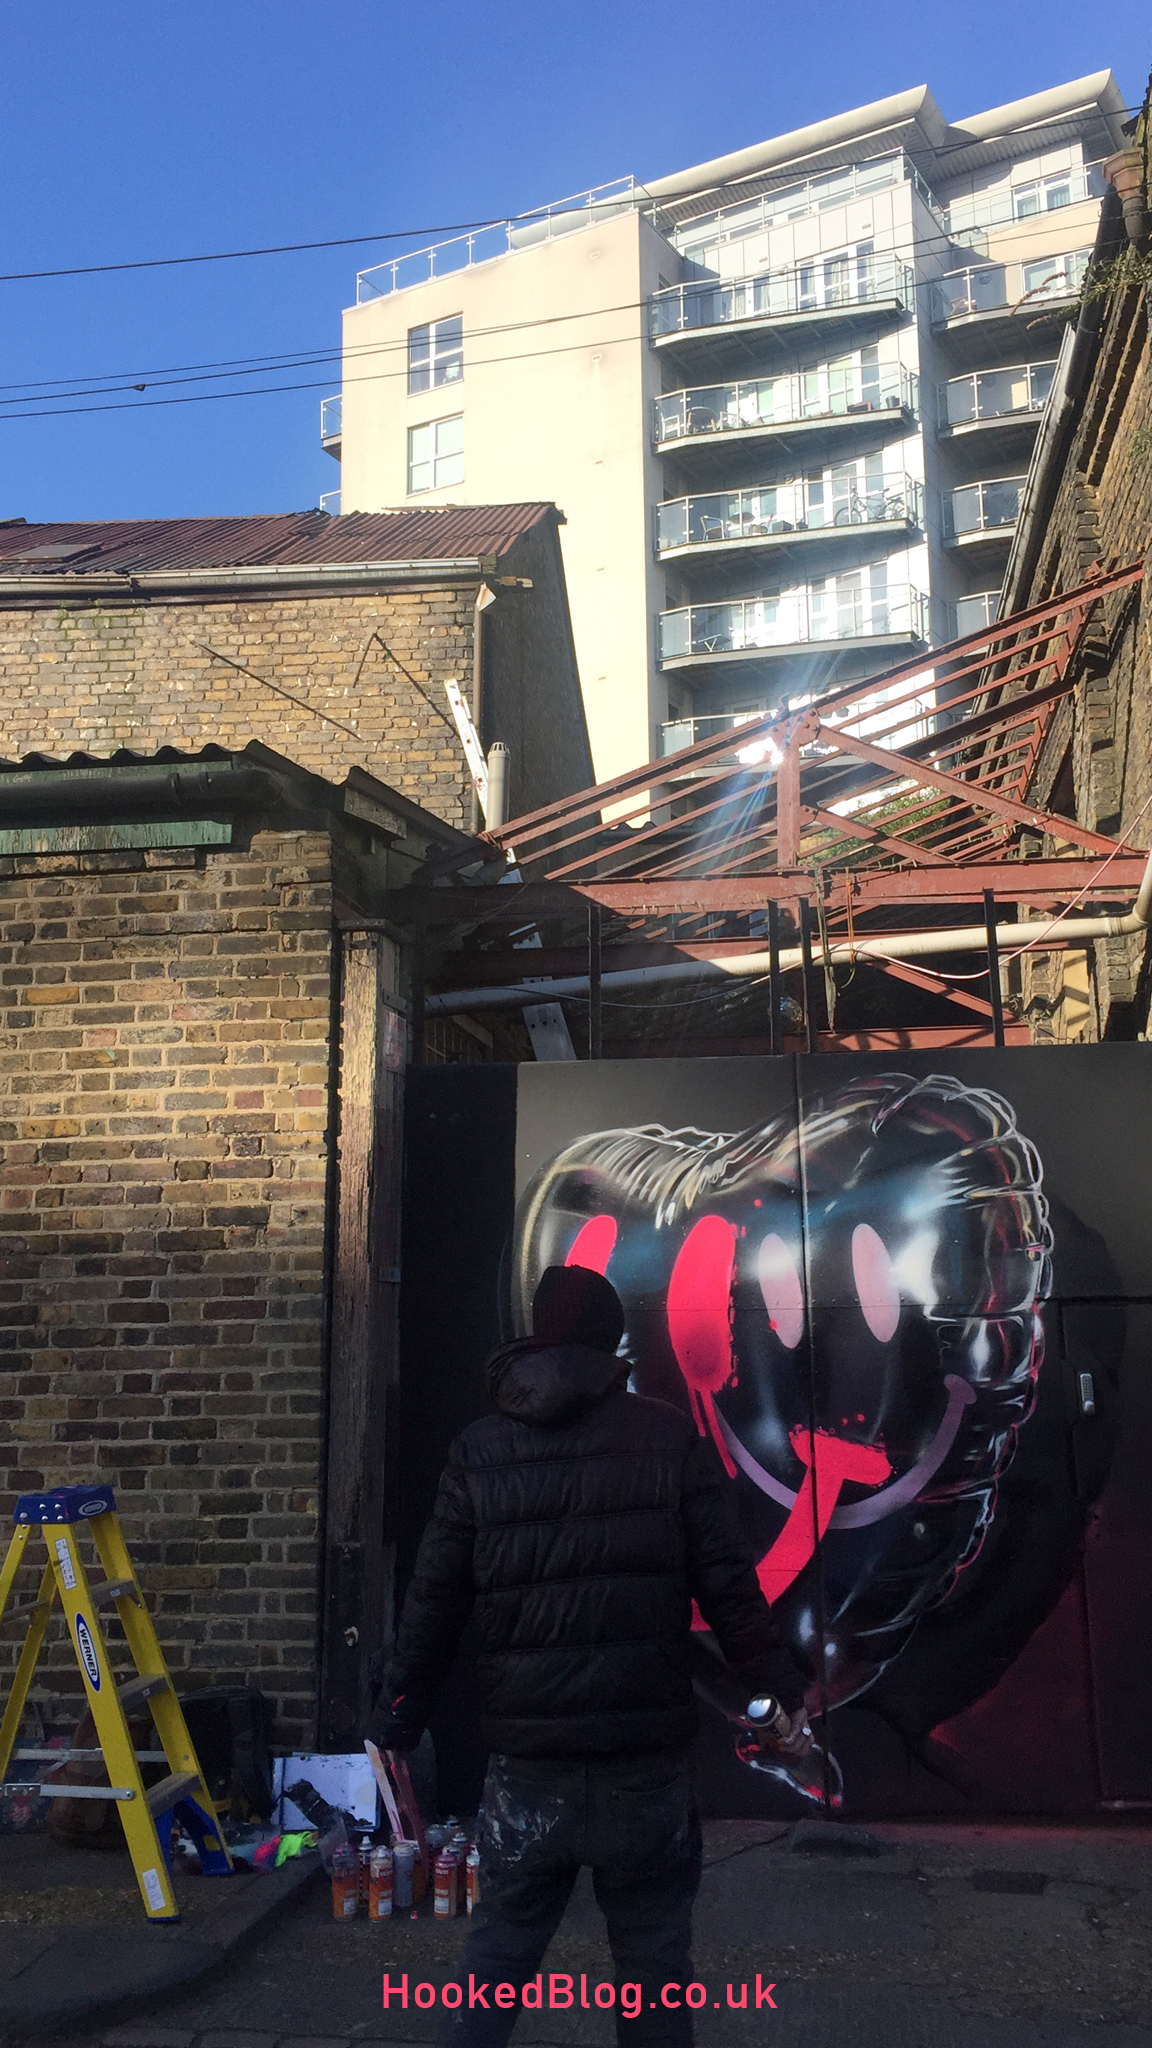 Street Artist Fanakapan debrand/ rebrand Mural in London, UK.